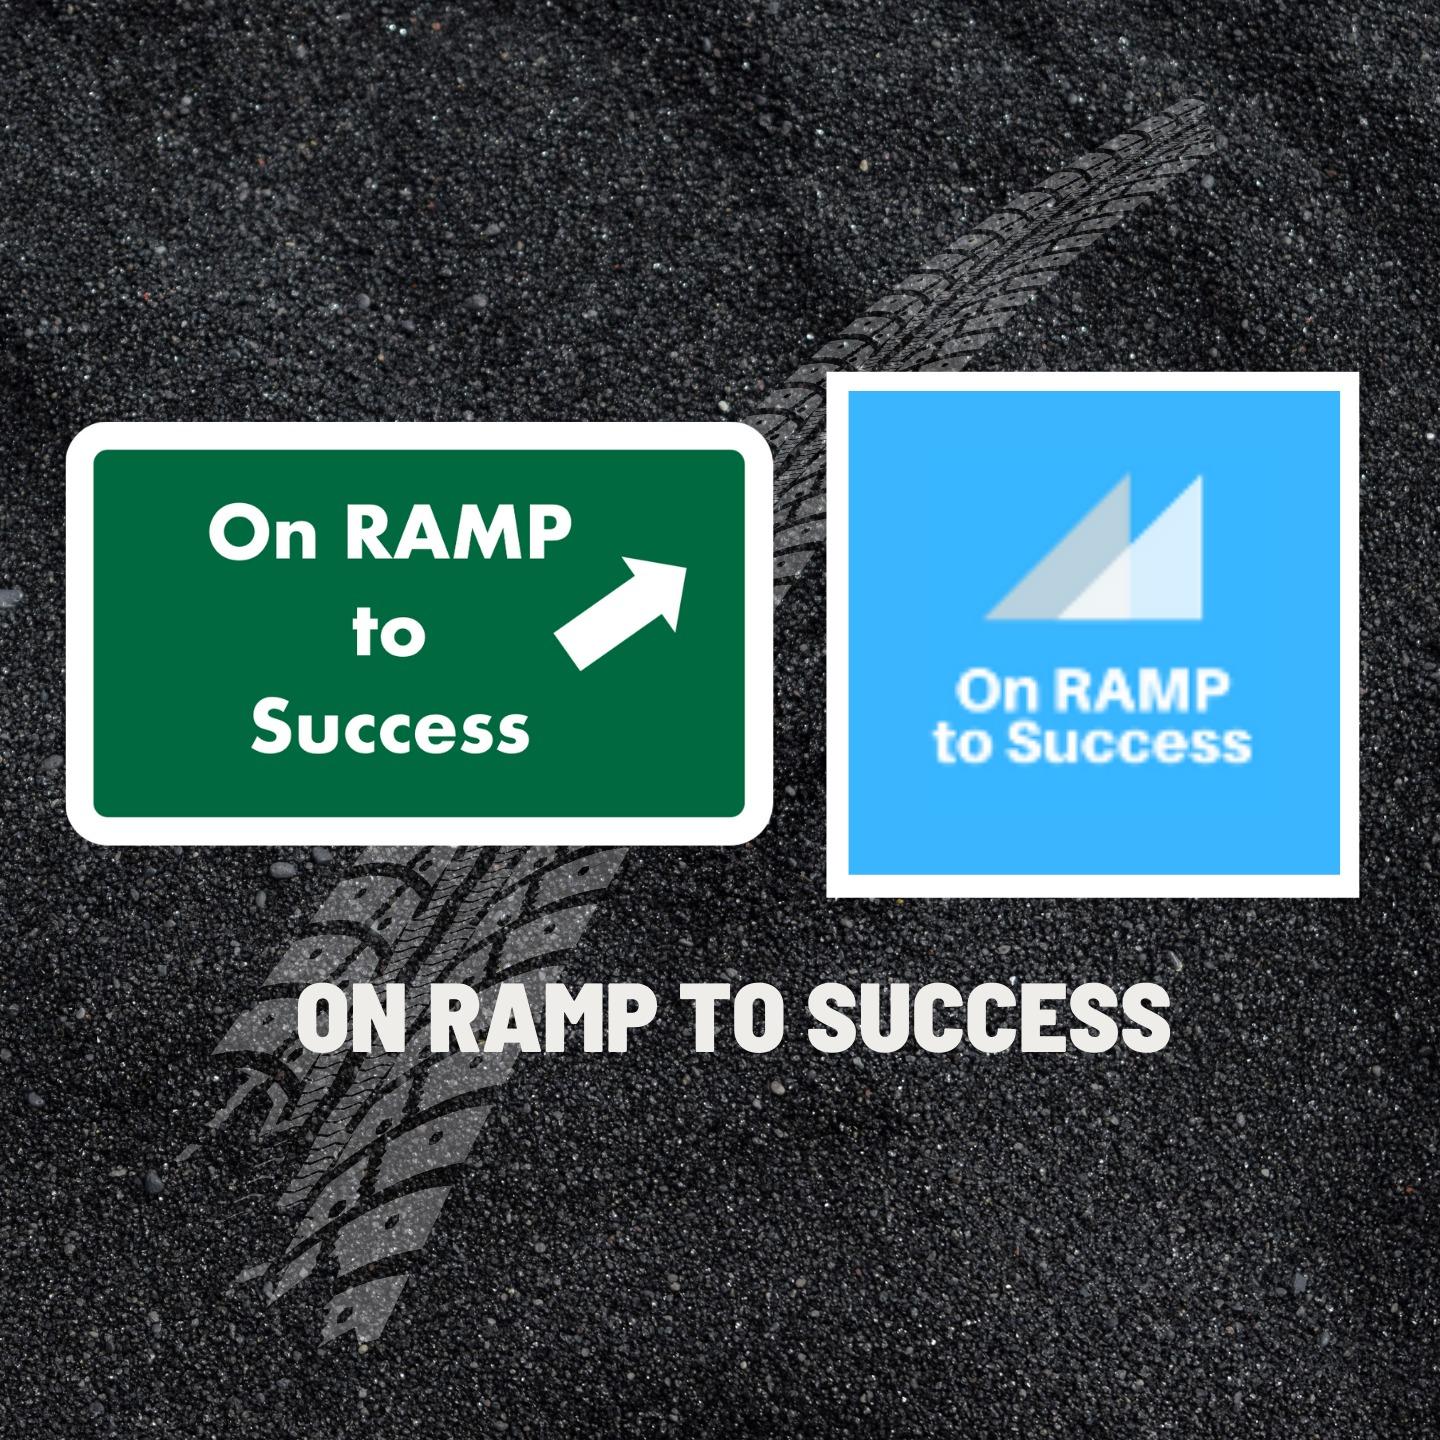 On Ramp to Success